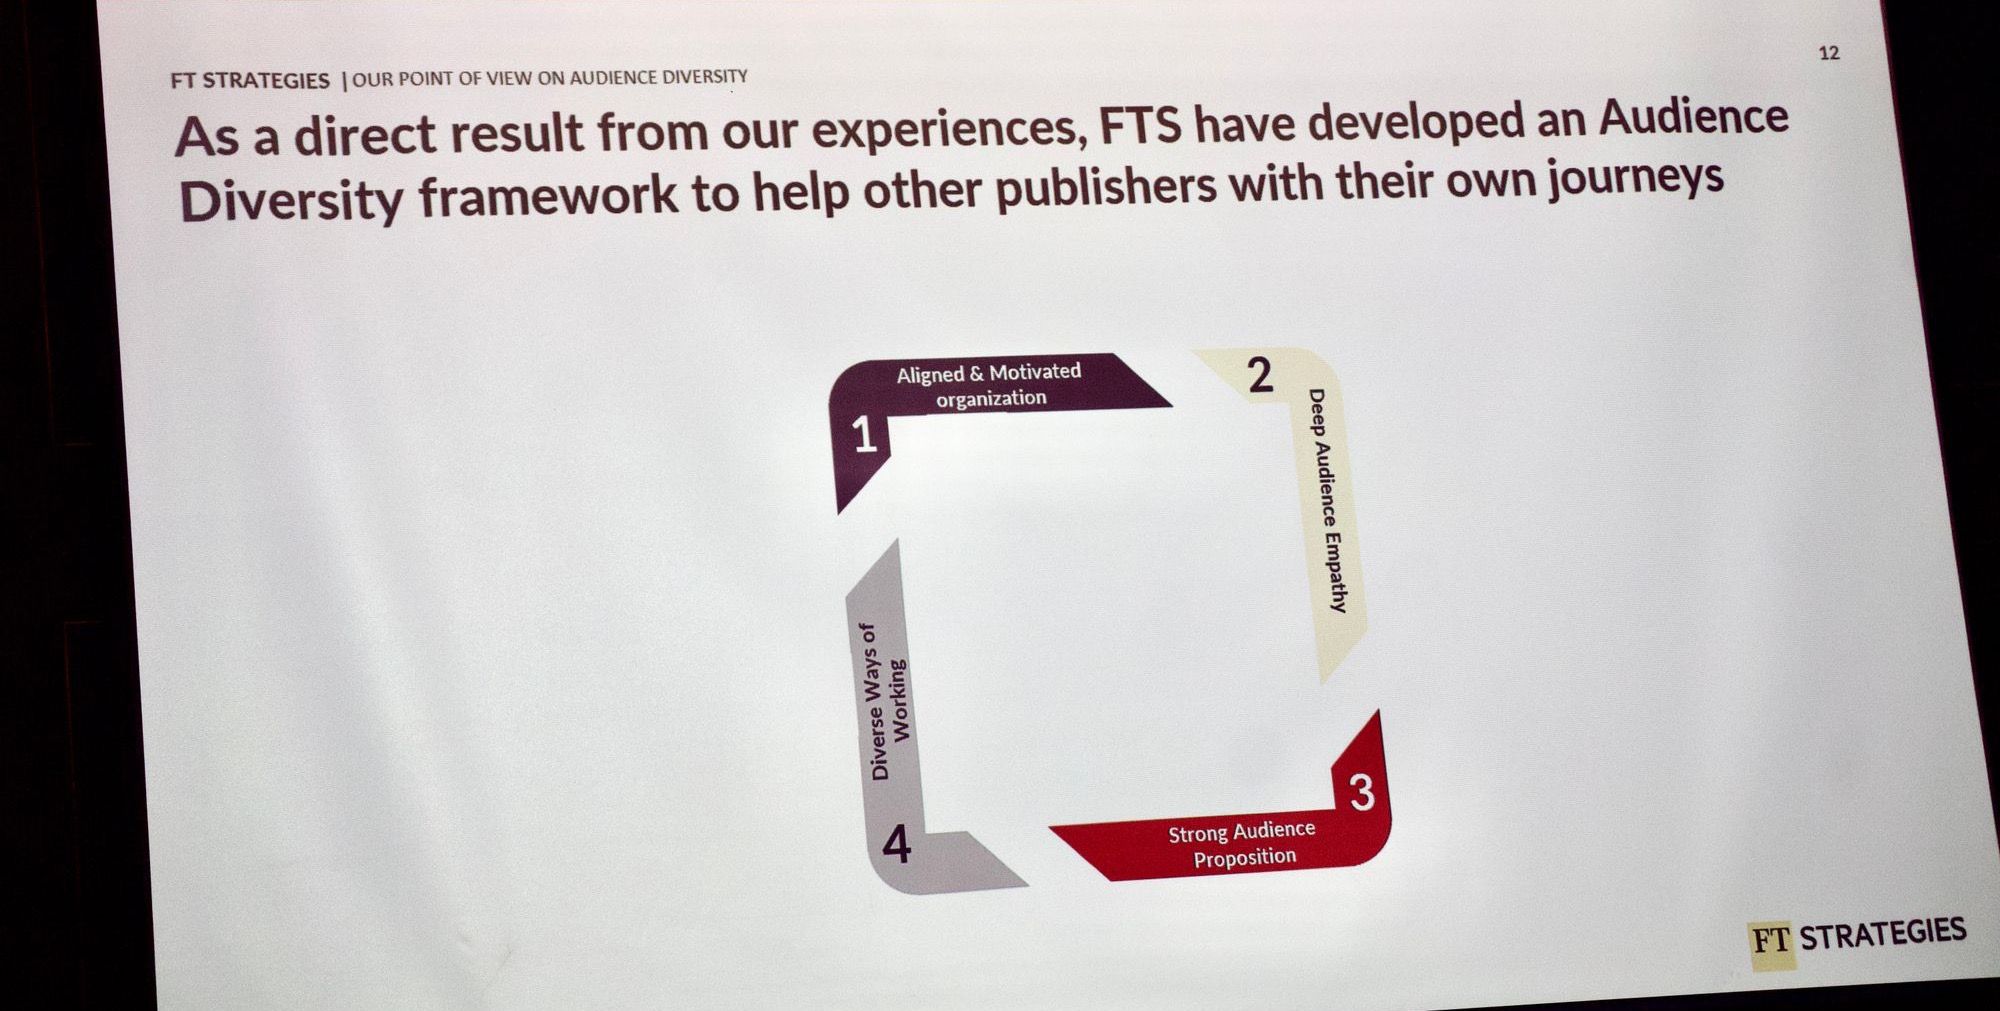 The FT Strategies diversity framework